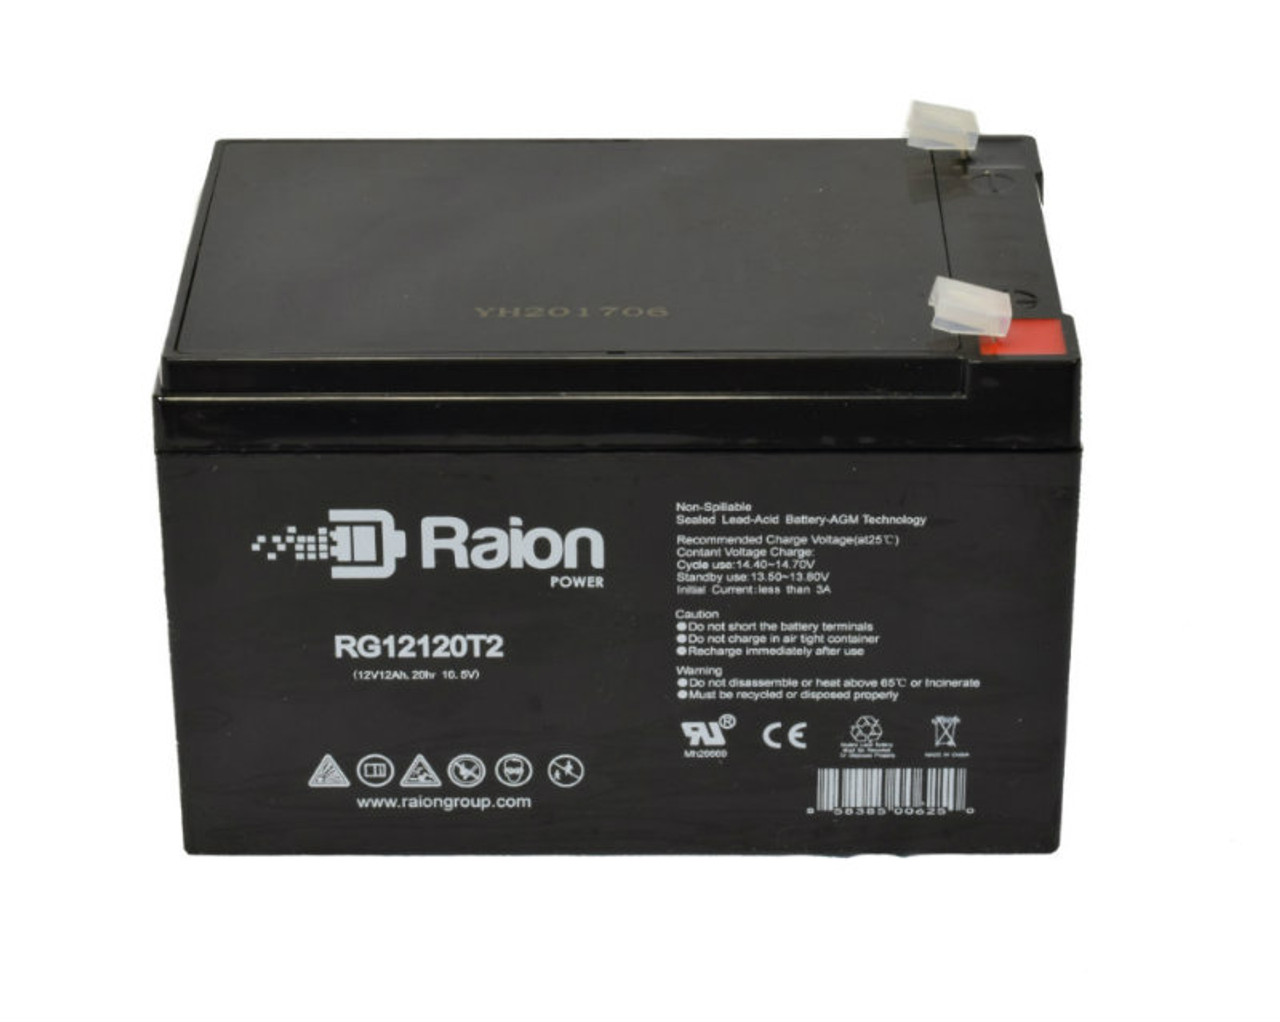 Raion Power RG12120T2 SLA Battery for Sonnenschein MG9